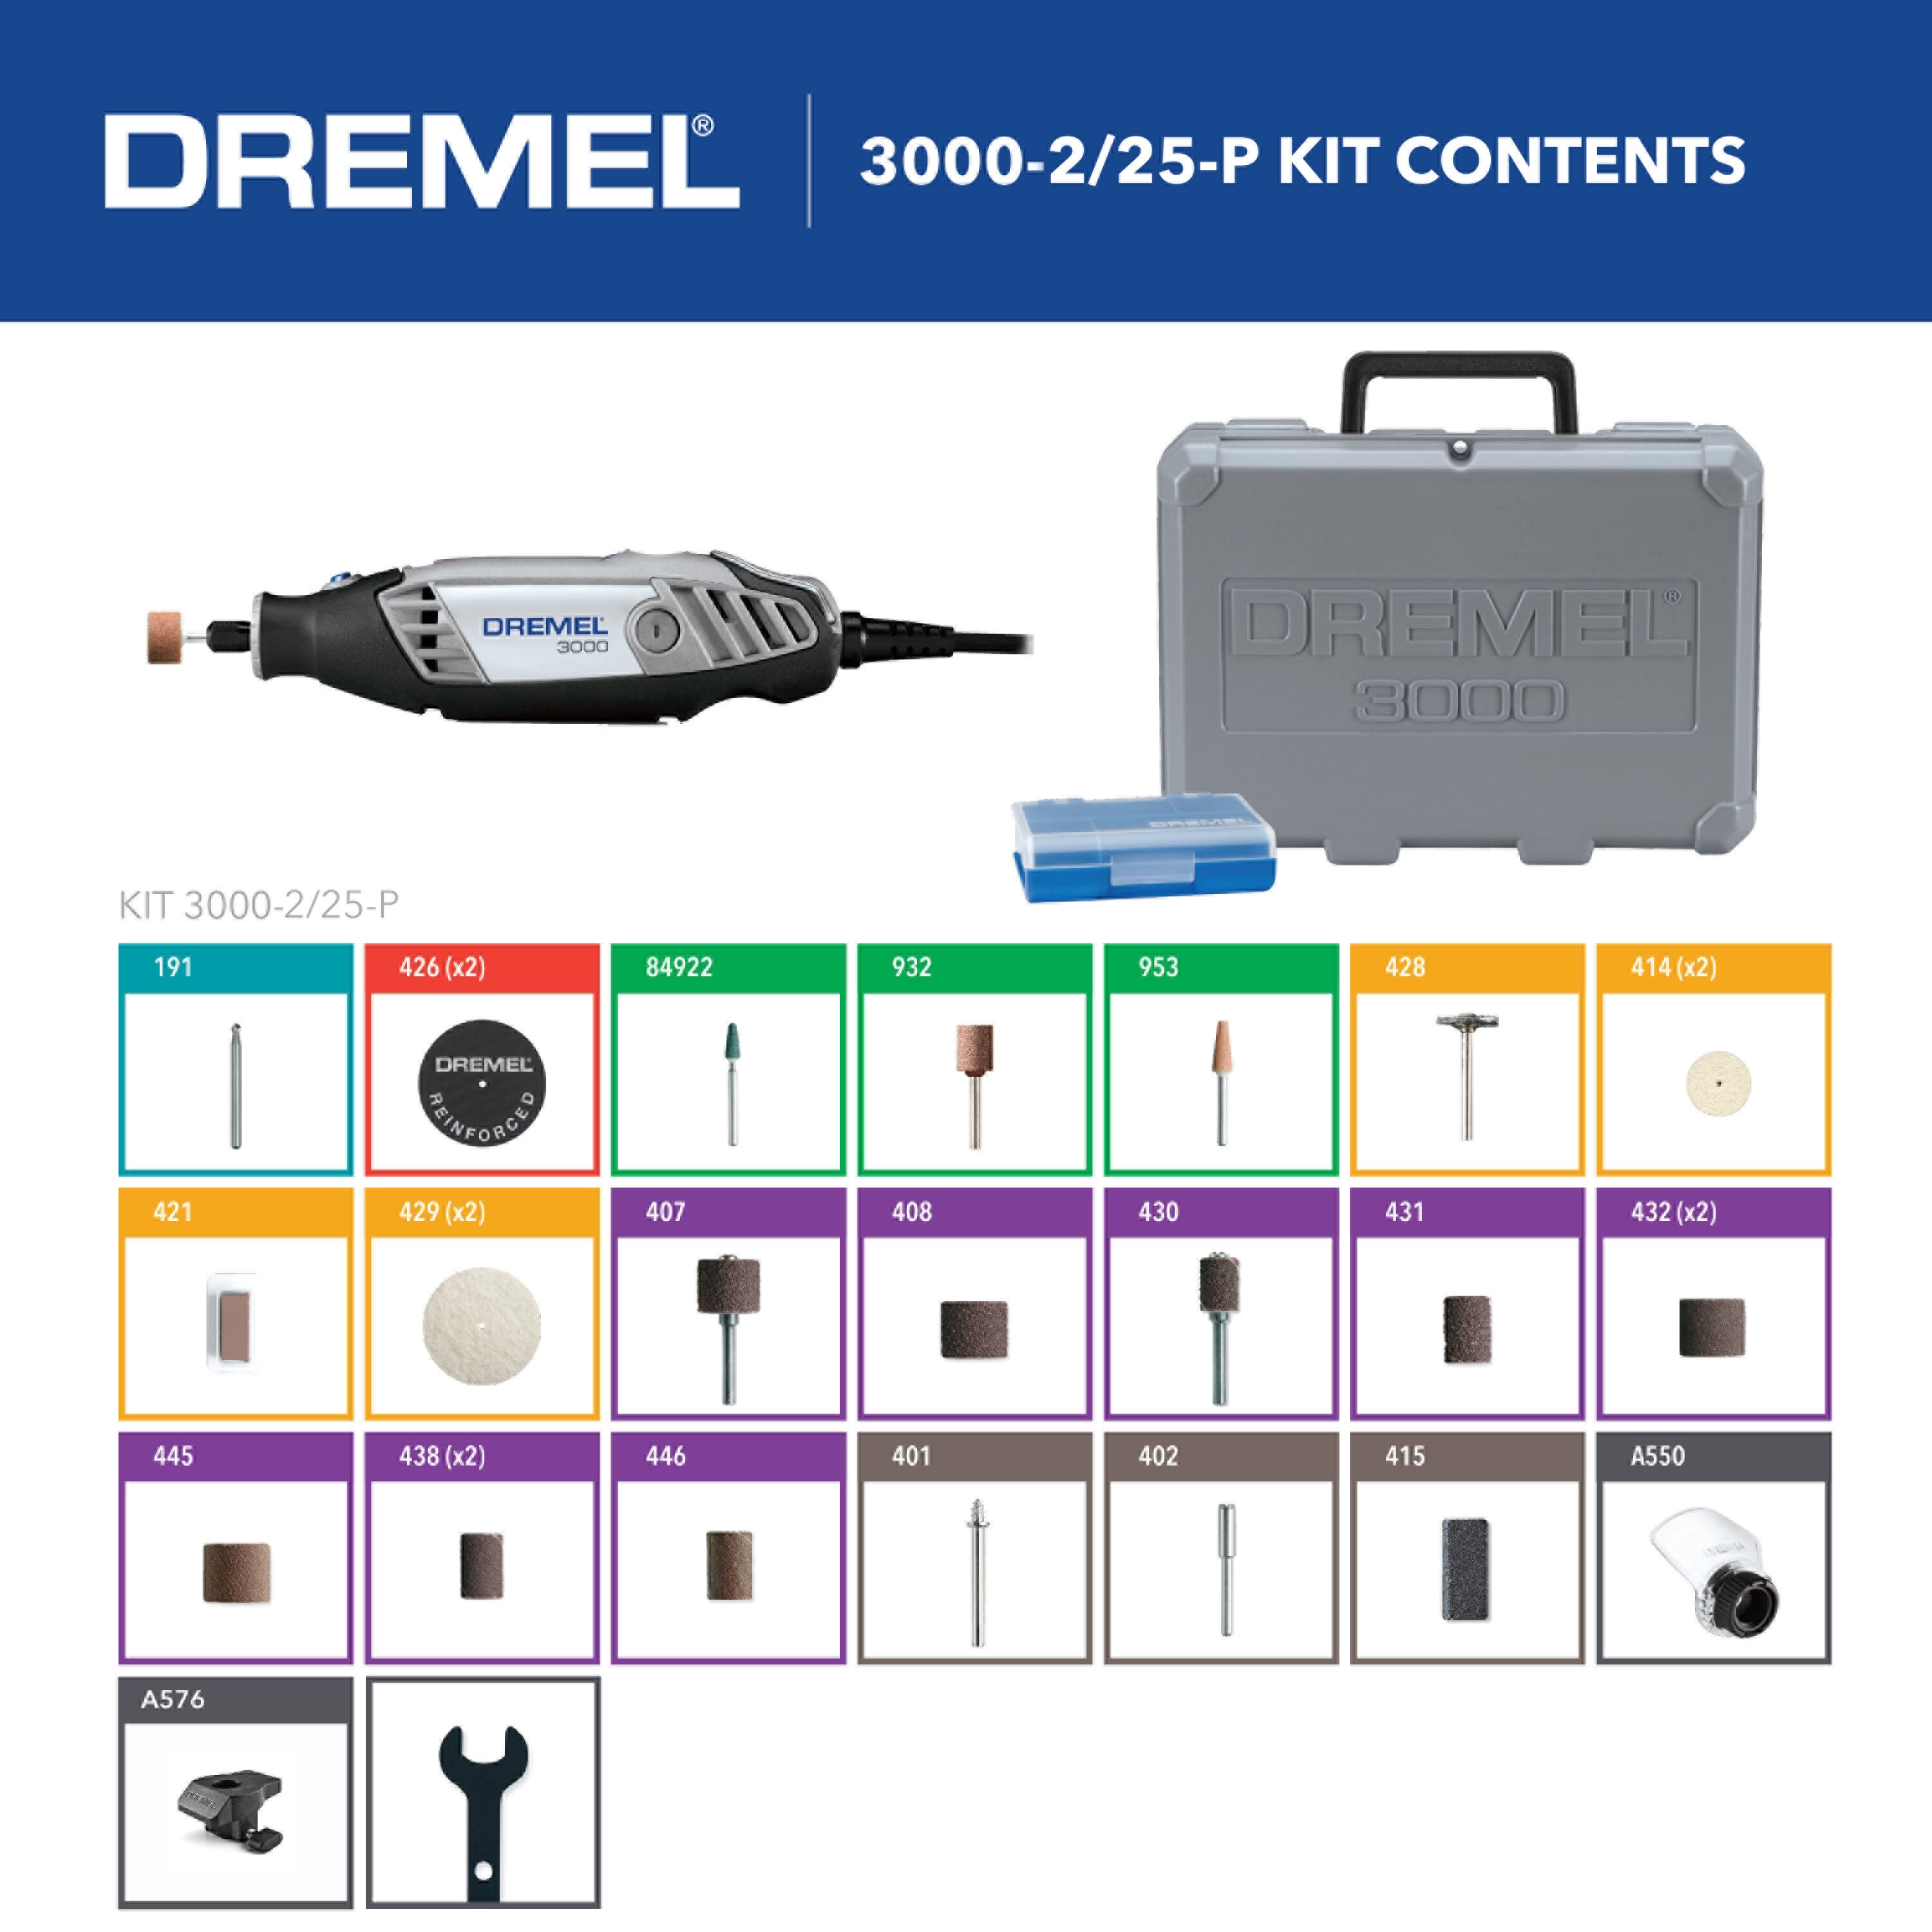 Dremel 3000-2/25-P Variable Speed Corded 1.2-Amp Multipurpose